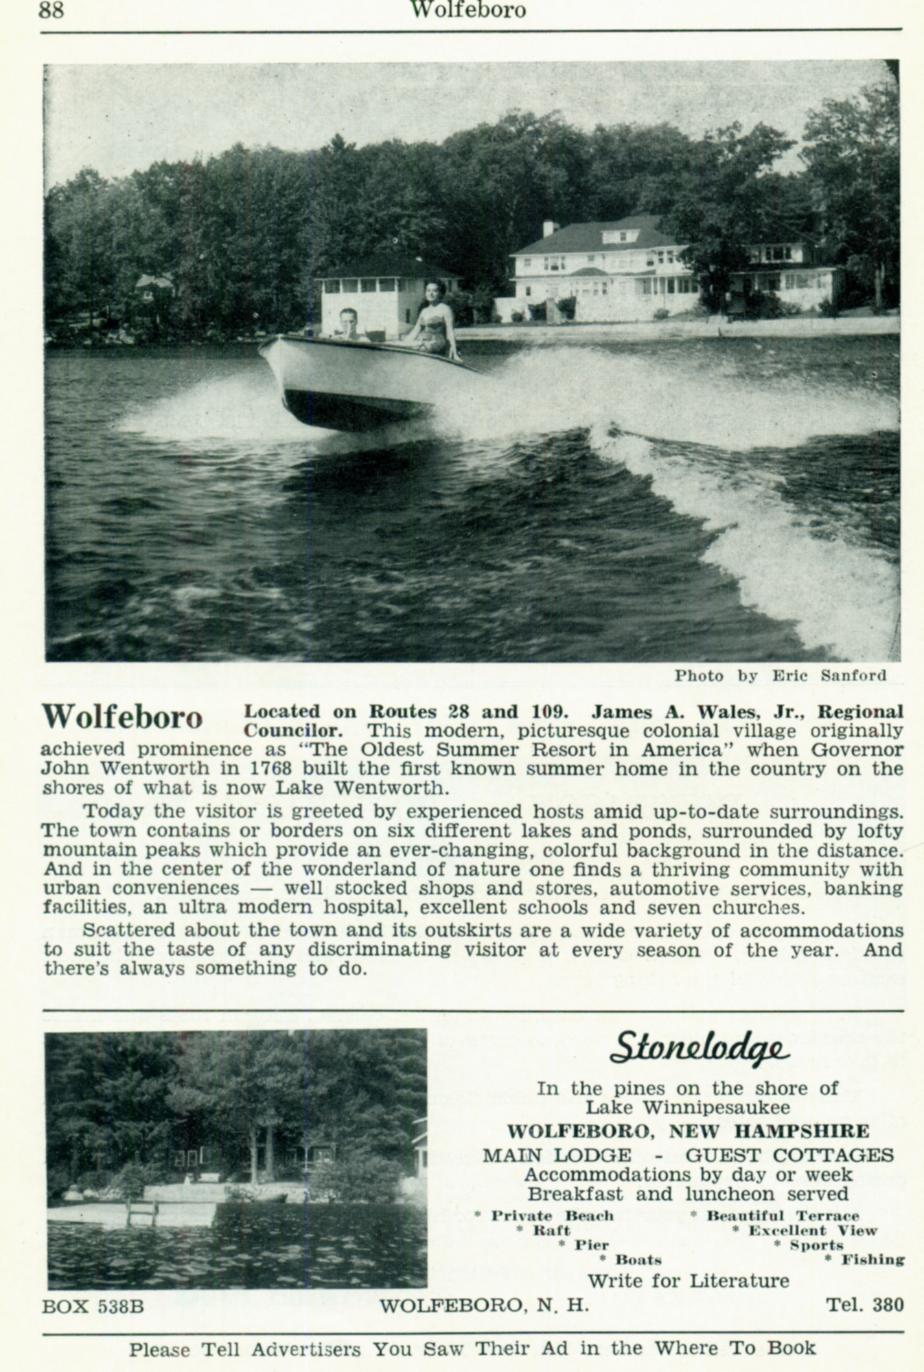 Wolfeboro Visitors Guide 1953